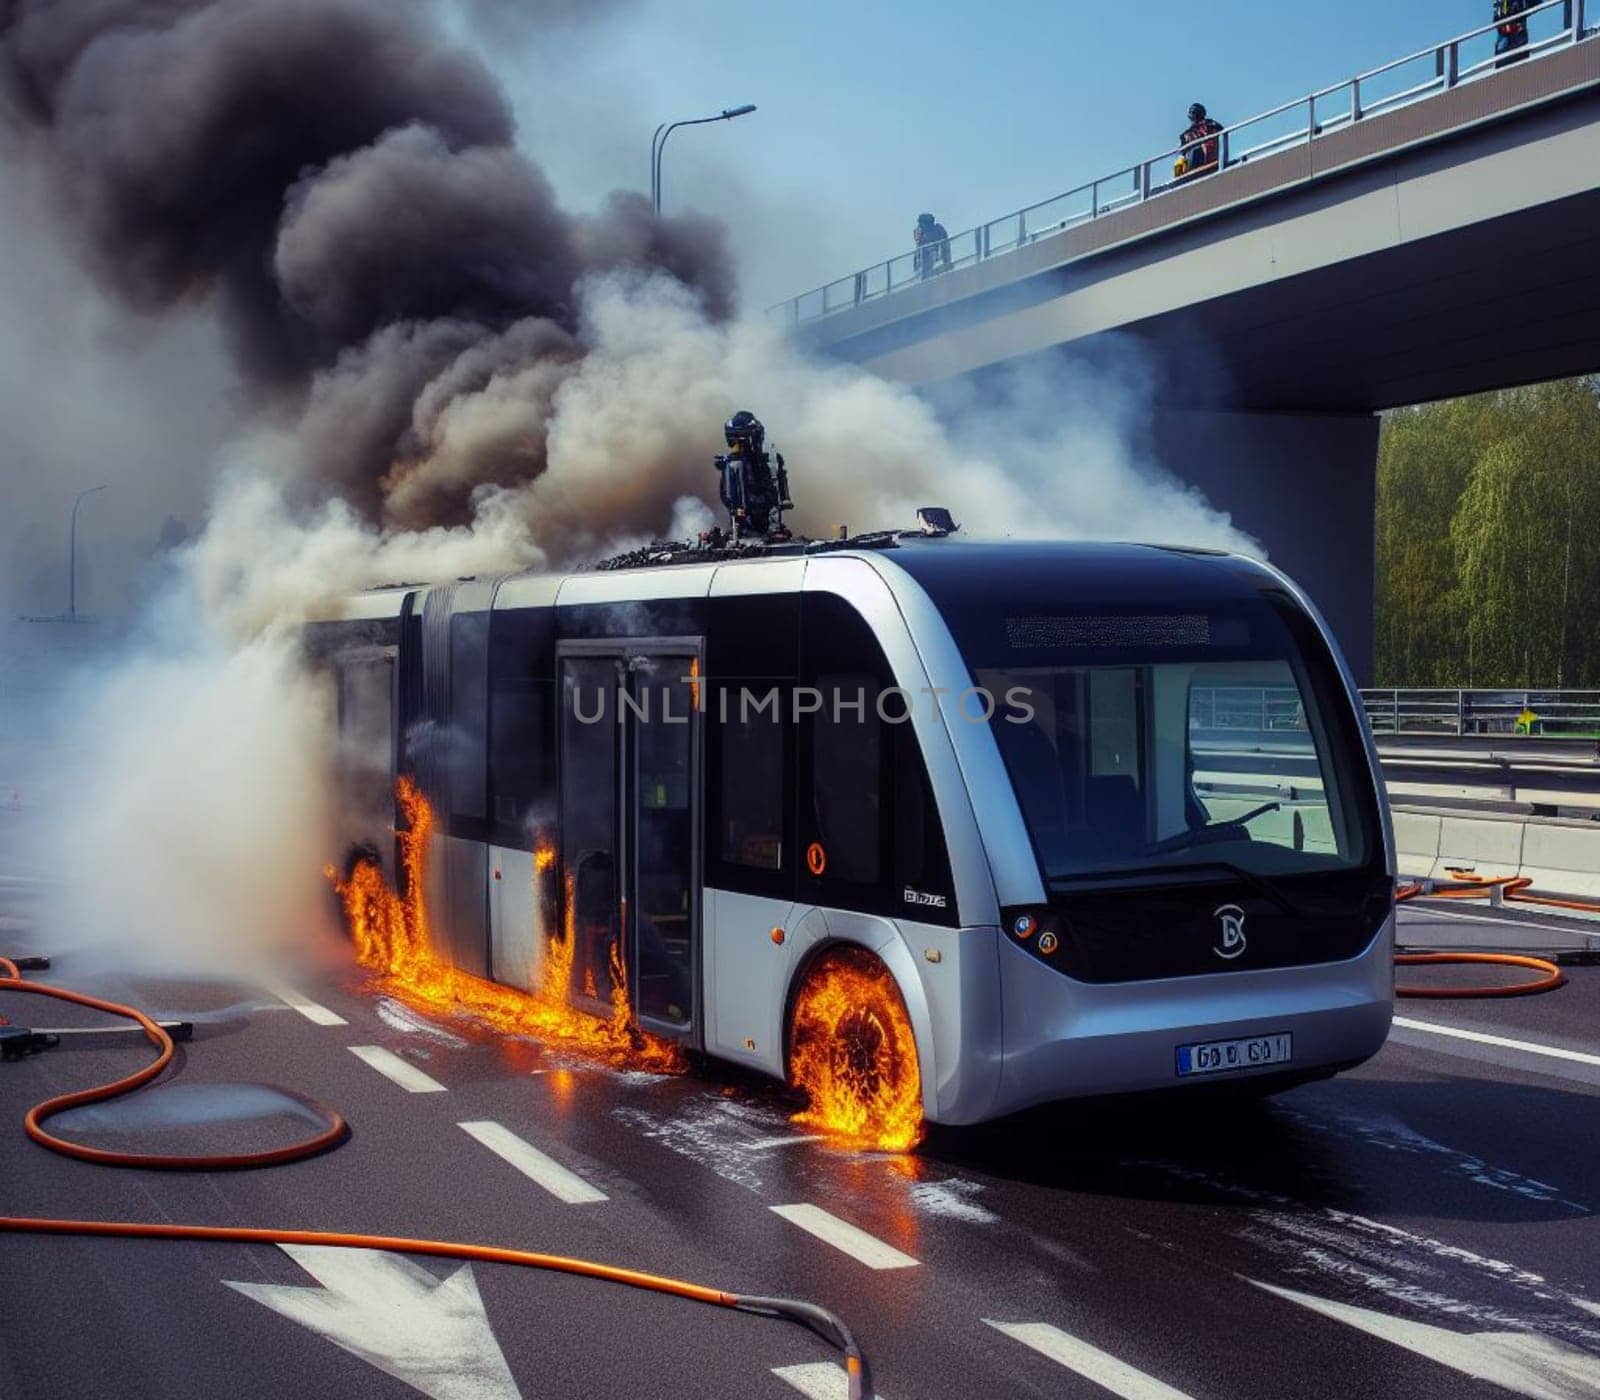 electric hybrid city bus burn bottom chasis, firefighter apply foam to extinguish flames big smoke by verbano